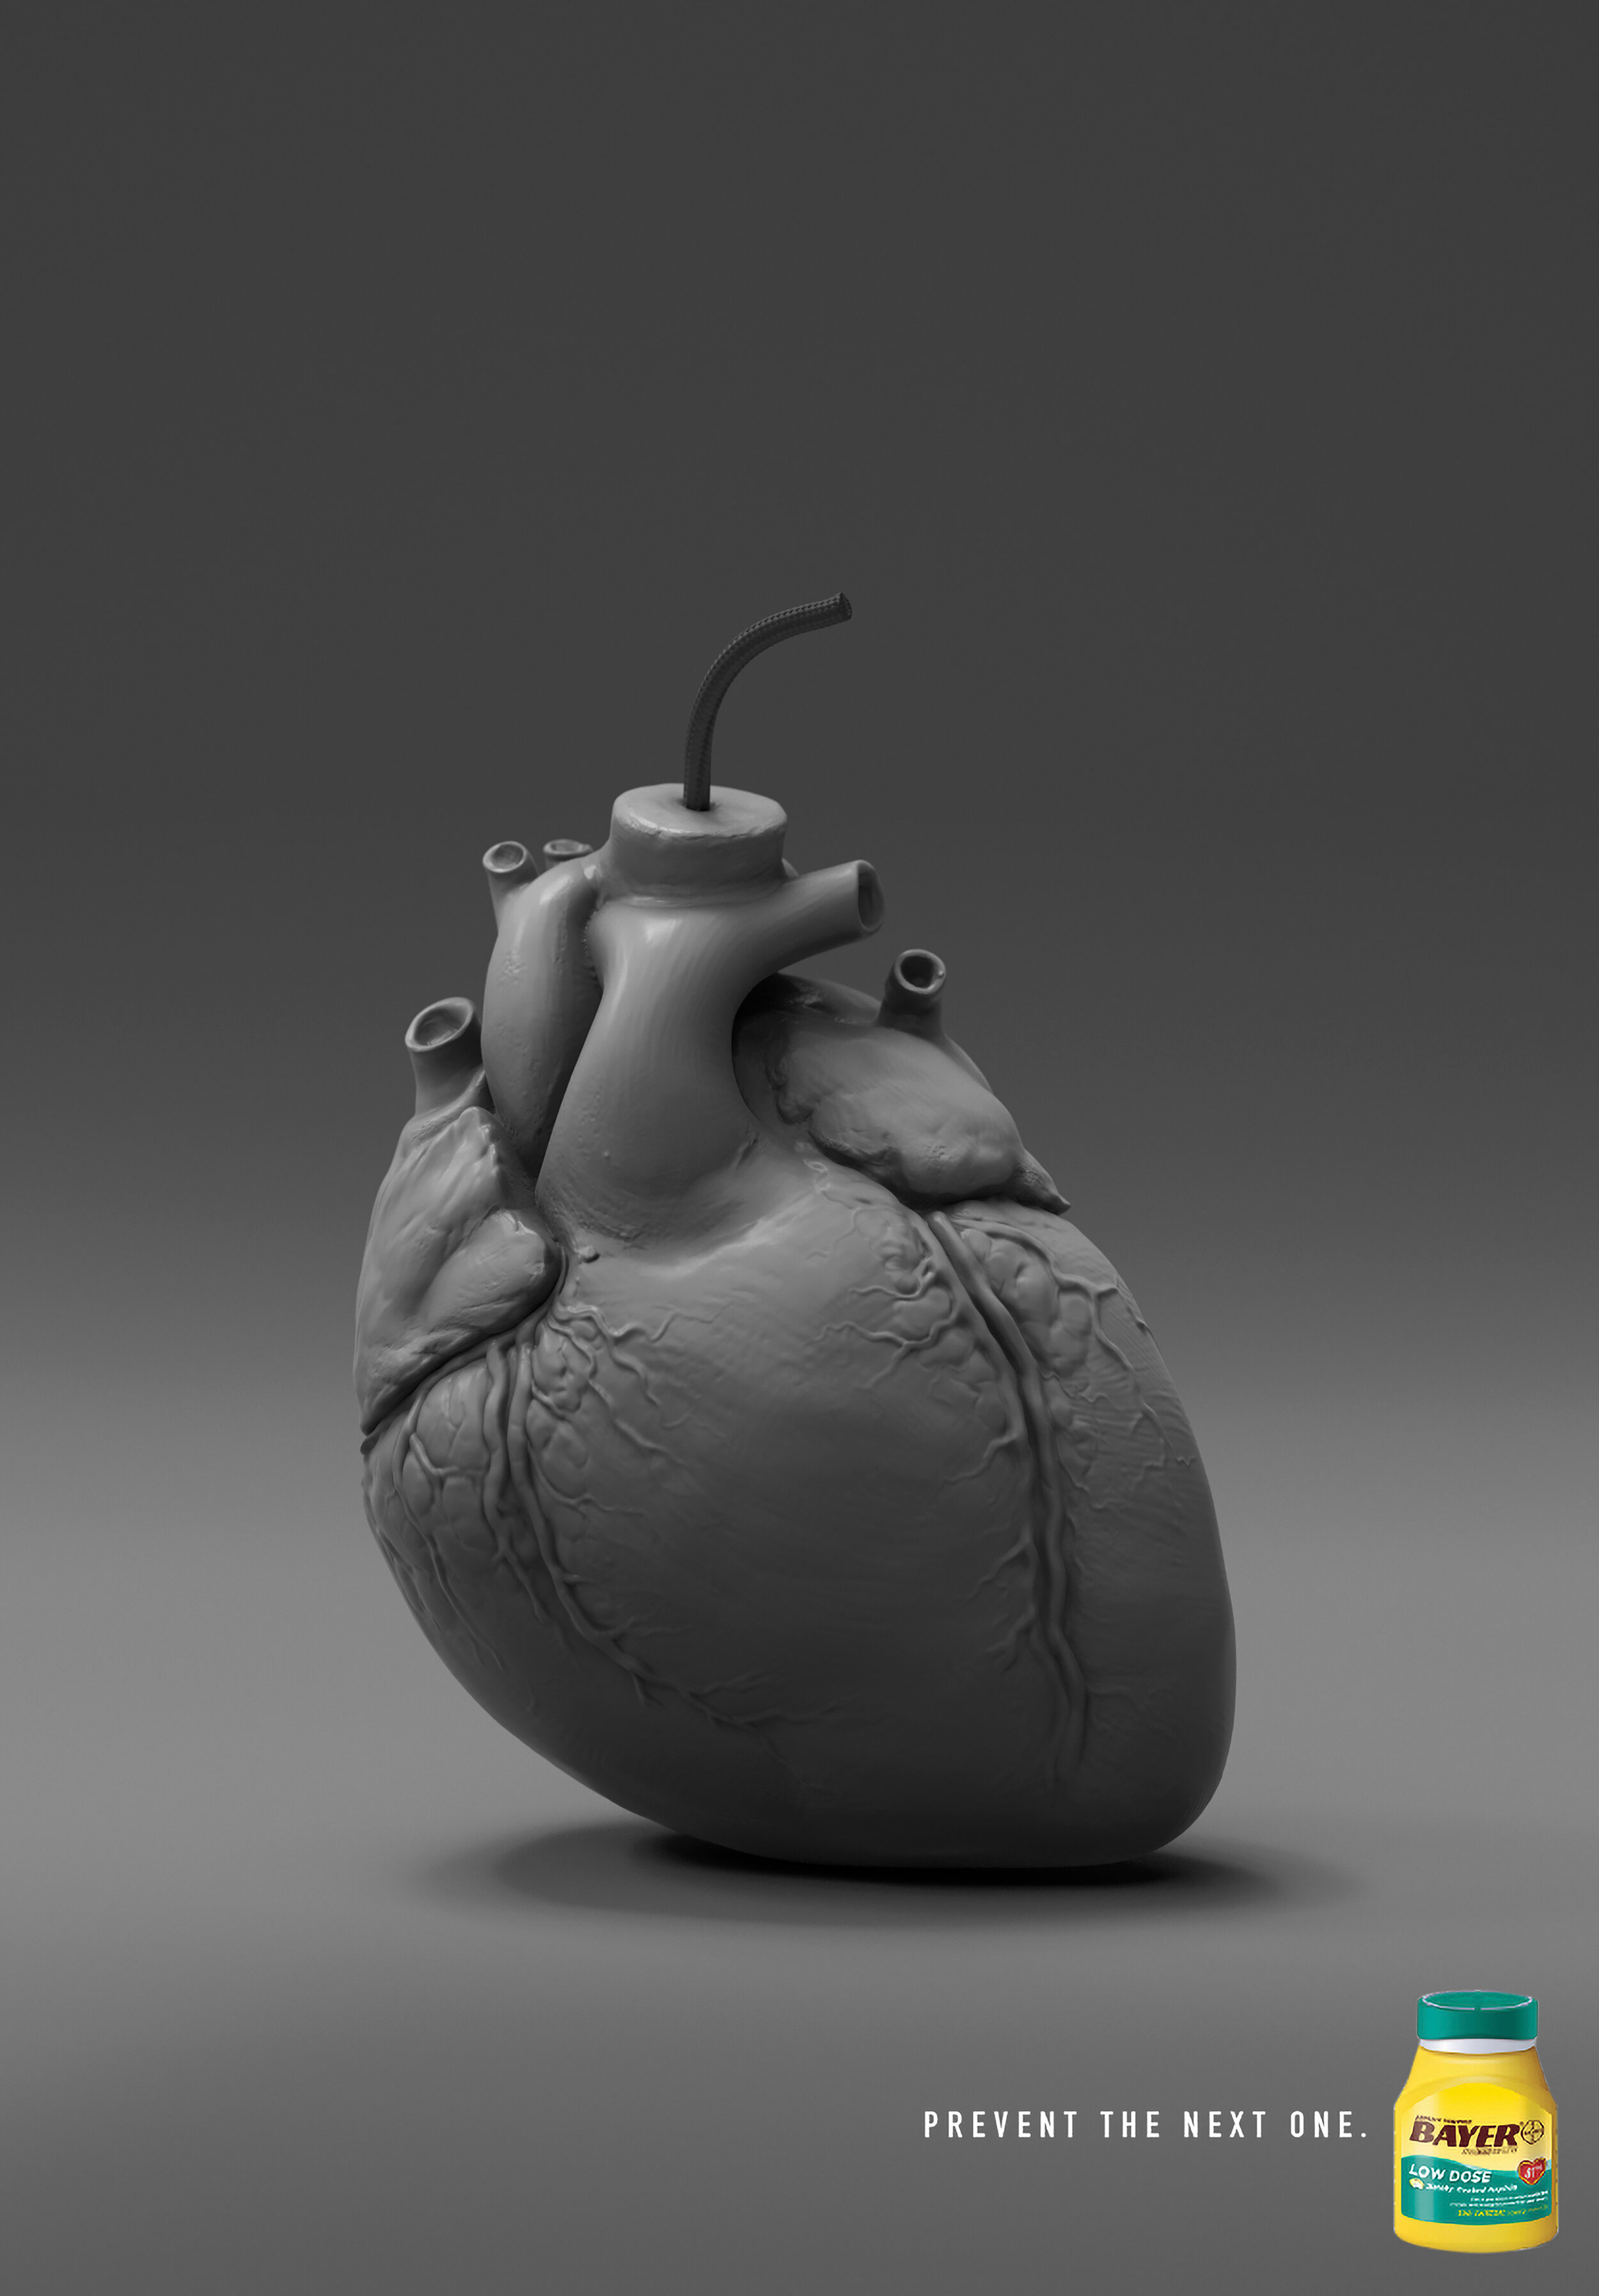 A_Heart Bomb_Model_2_Crop_sRGB5000.jpg